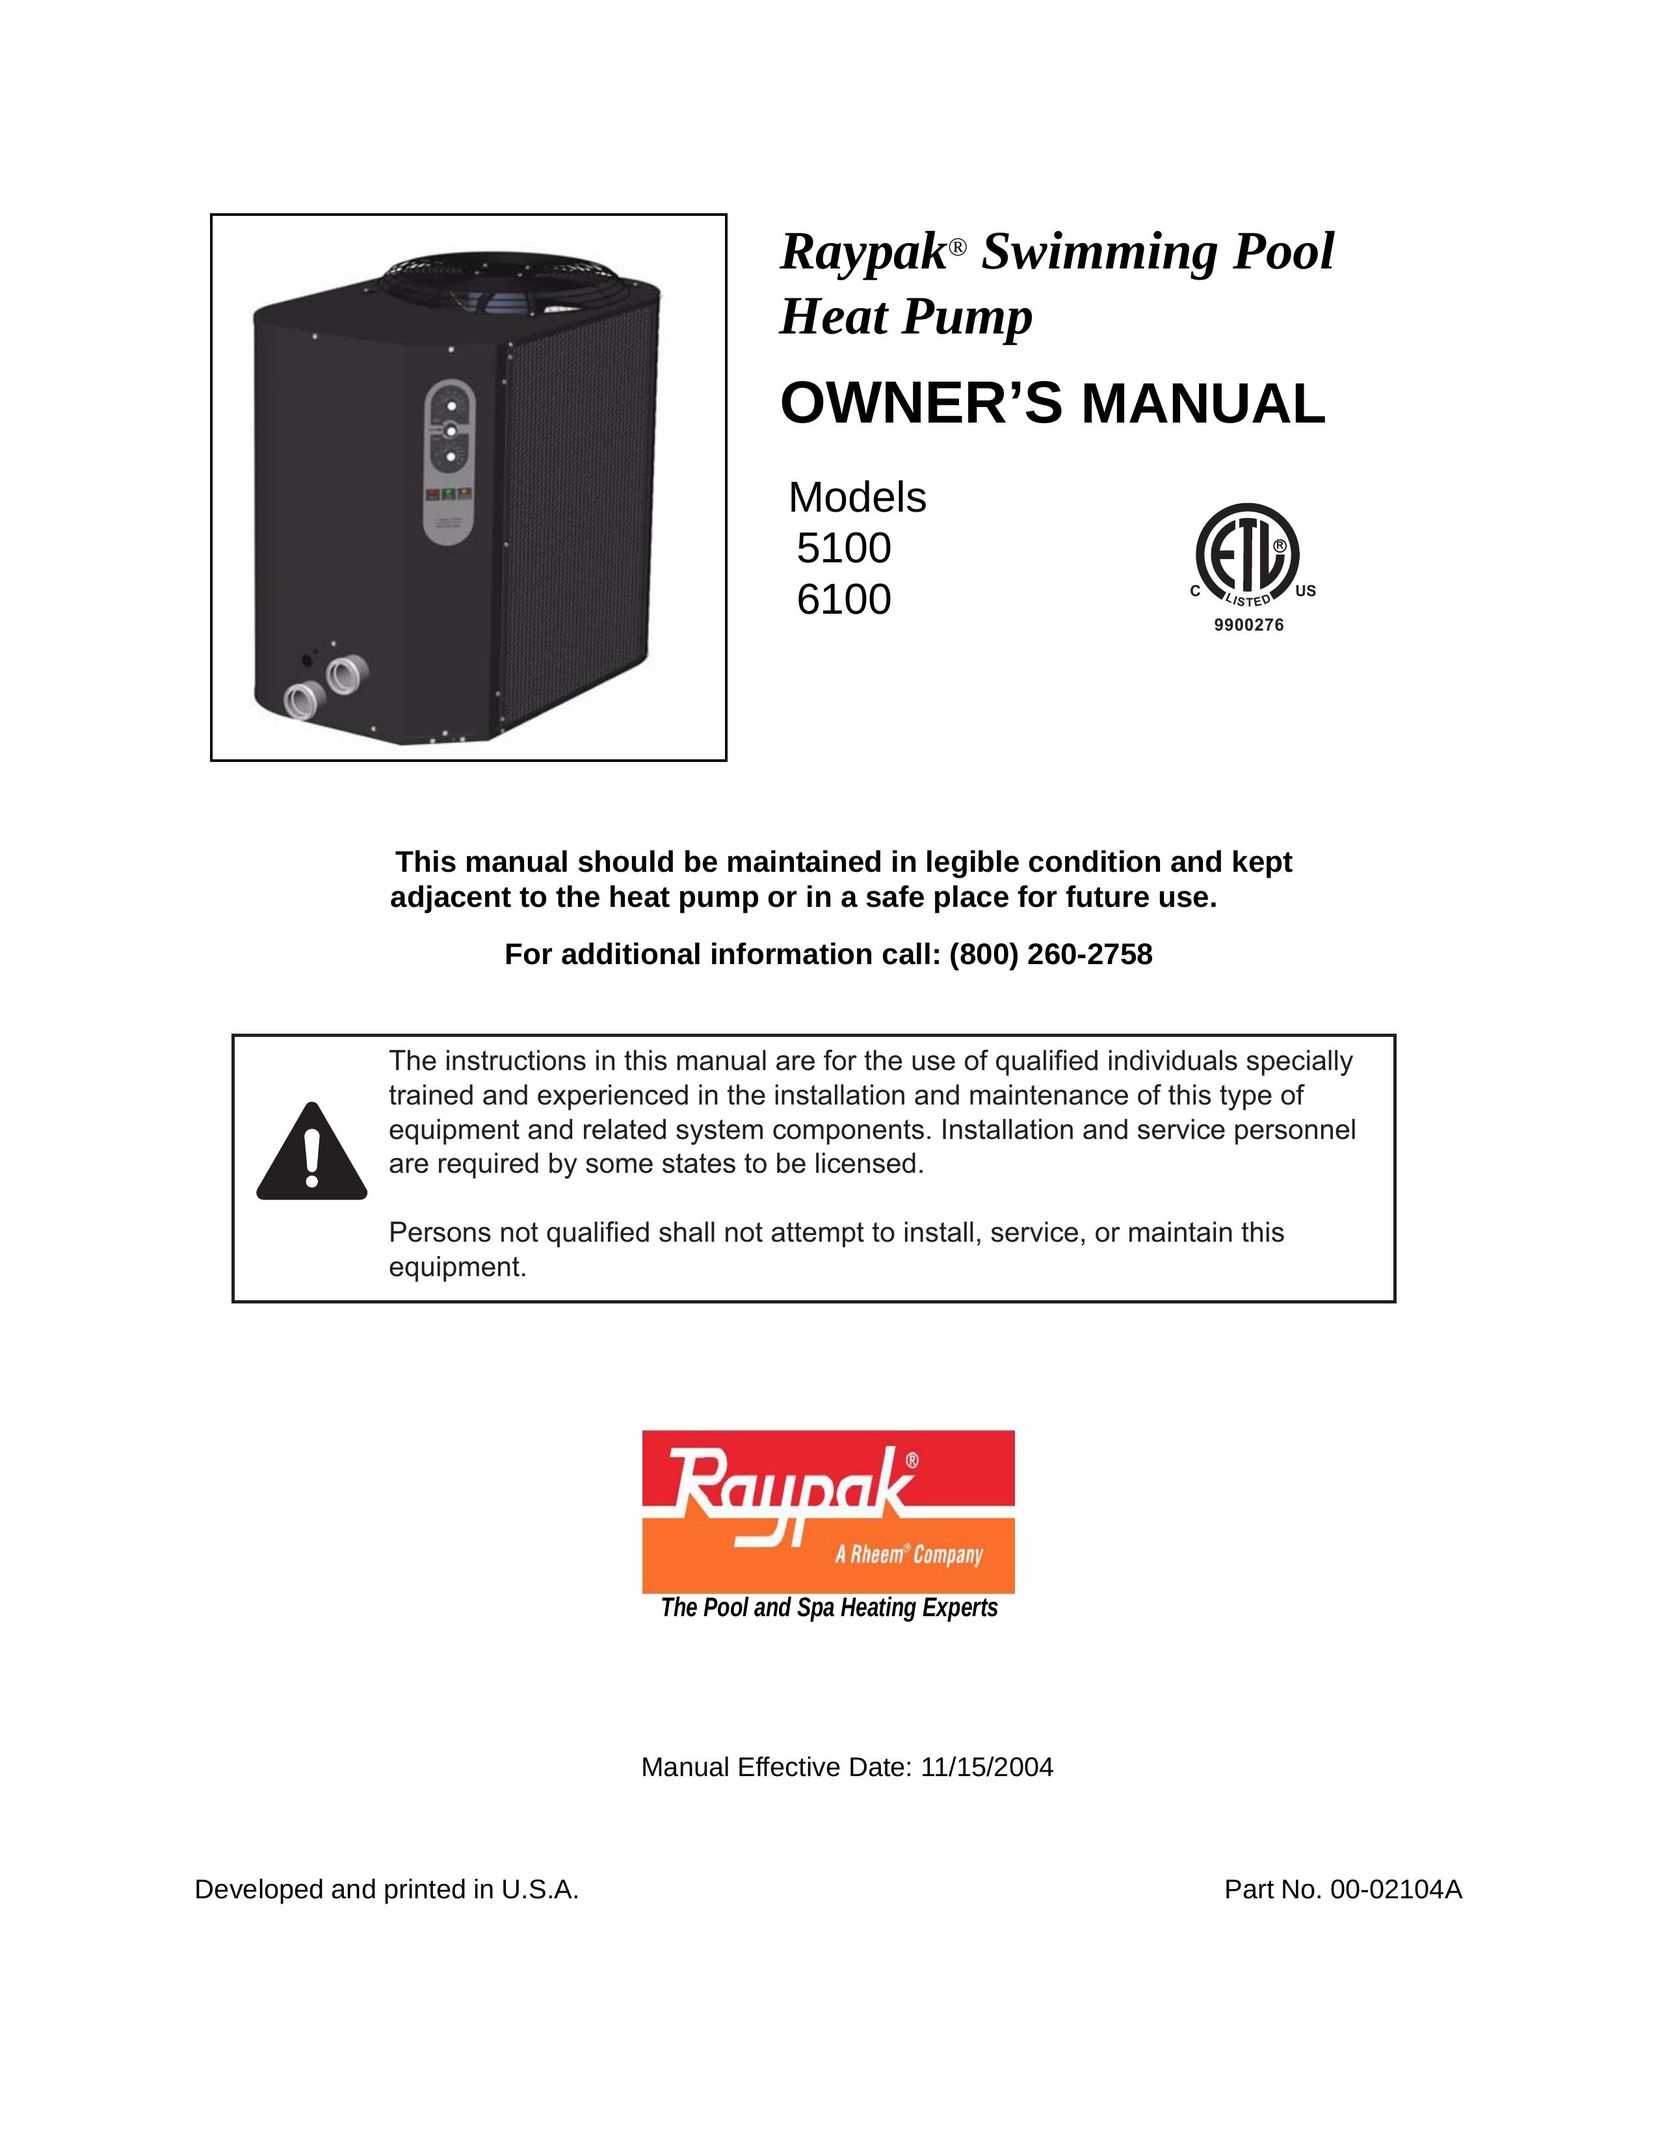 Raypak 5100 Heat Pump User Manual